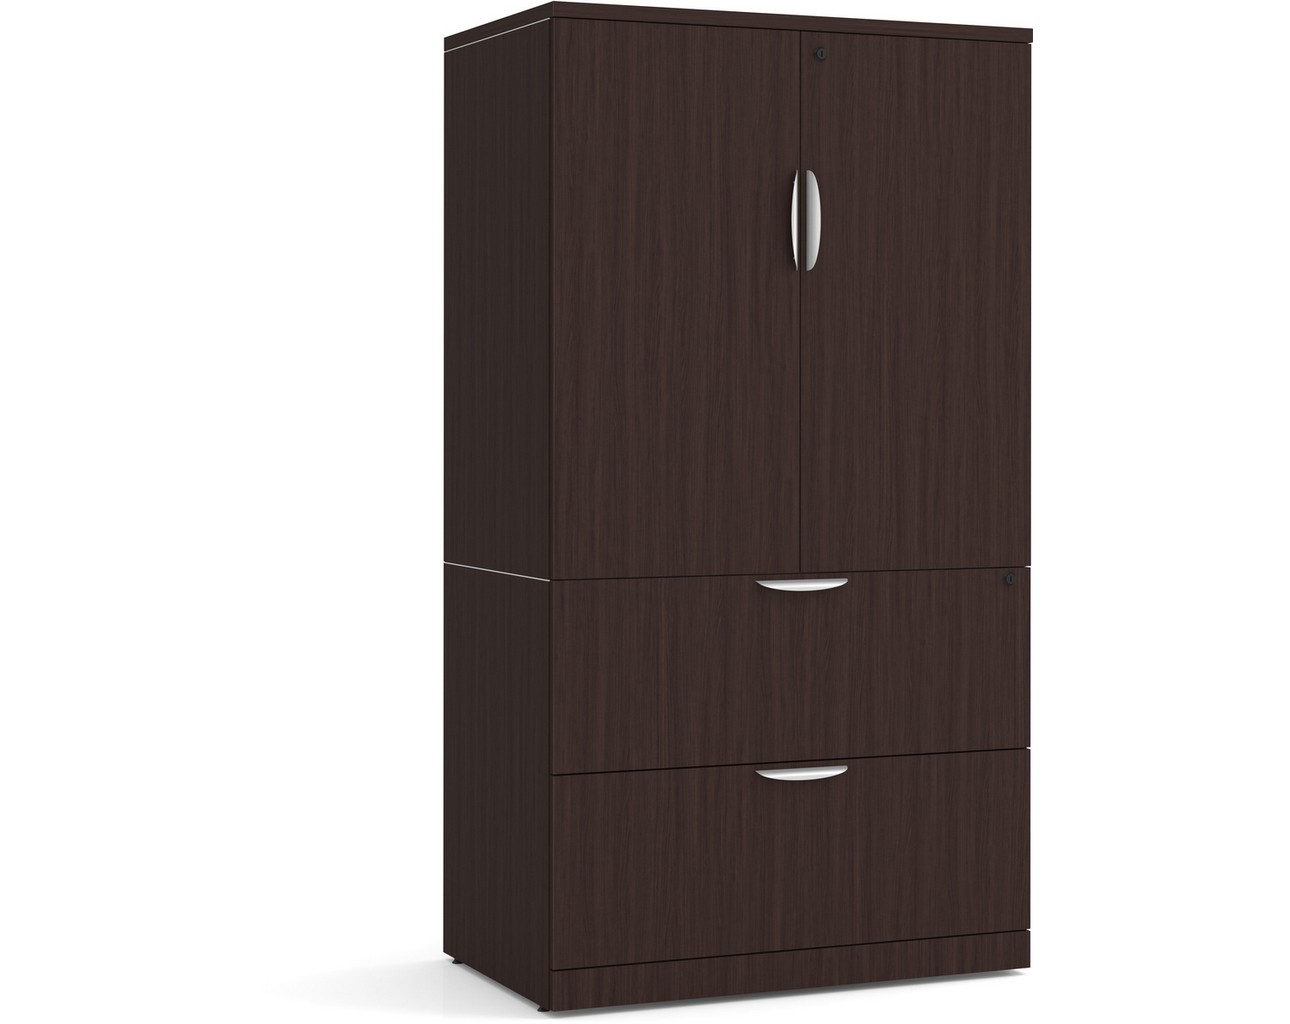 Locking Storage Cabinet and Lateral File Combo Unit – Espresso